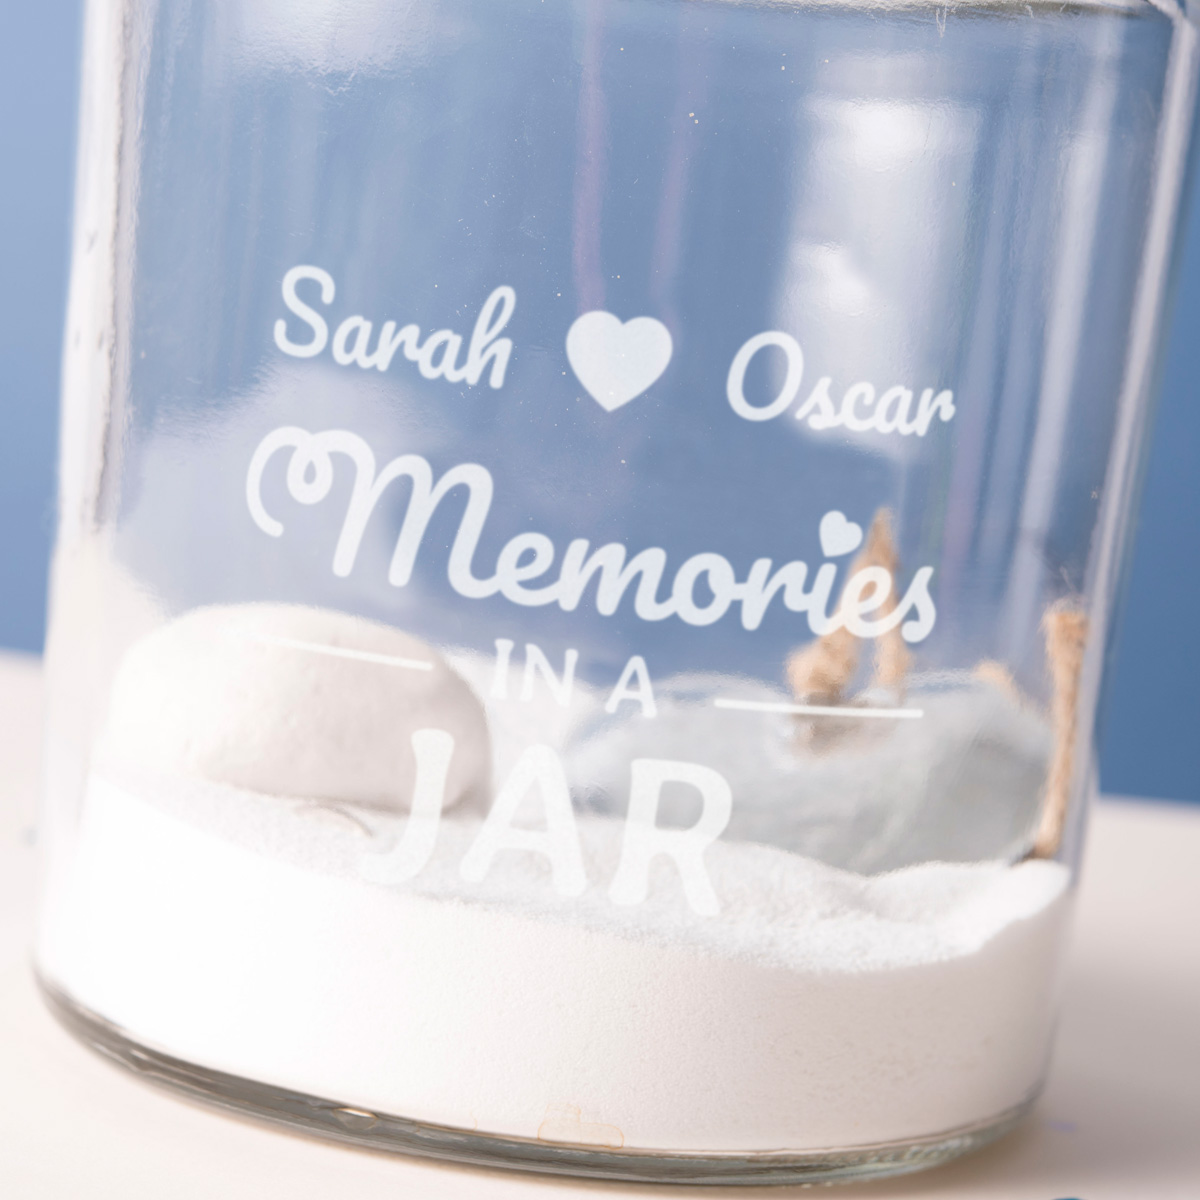 Personalised Glass Jar - Memories In A Jar